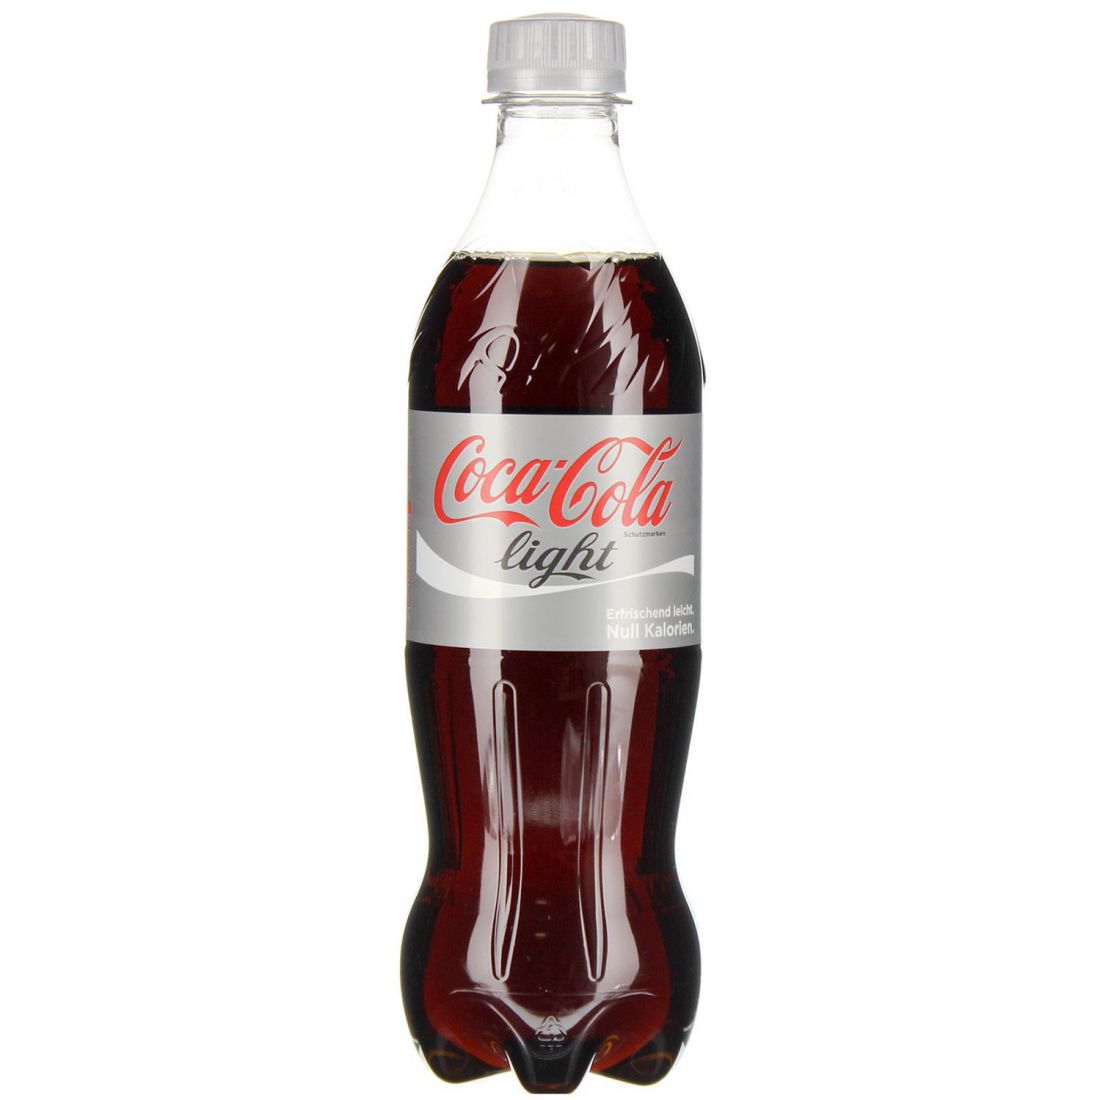 Coca Cola Light 0,5 liter